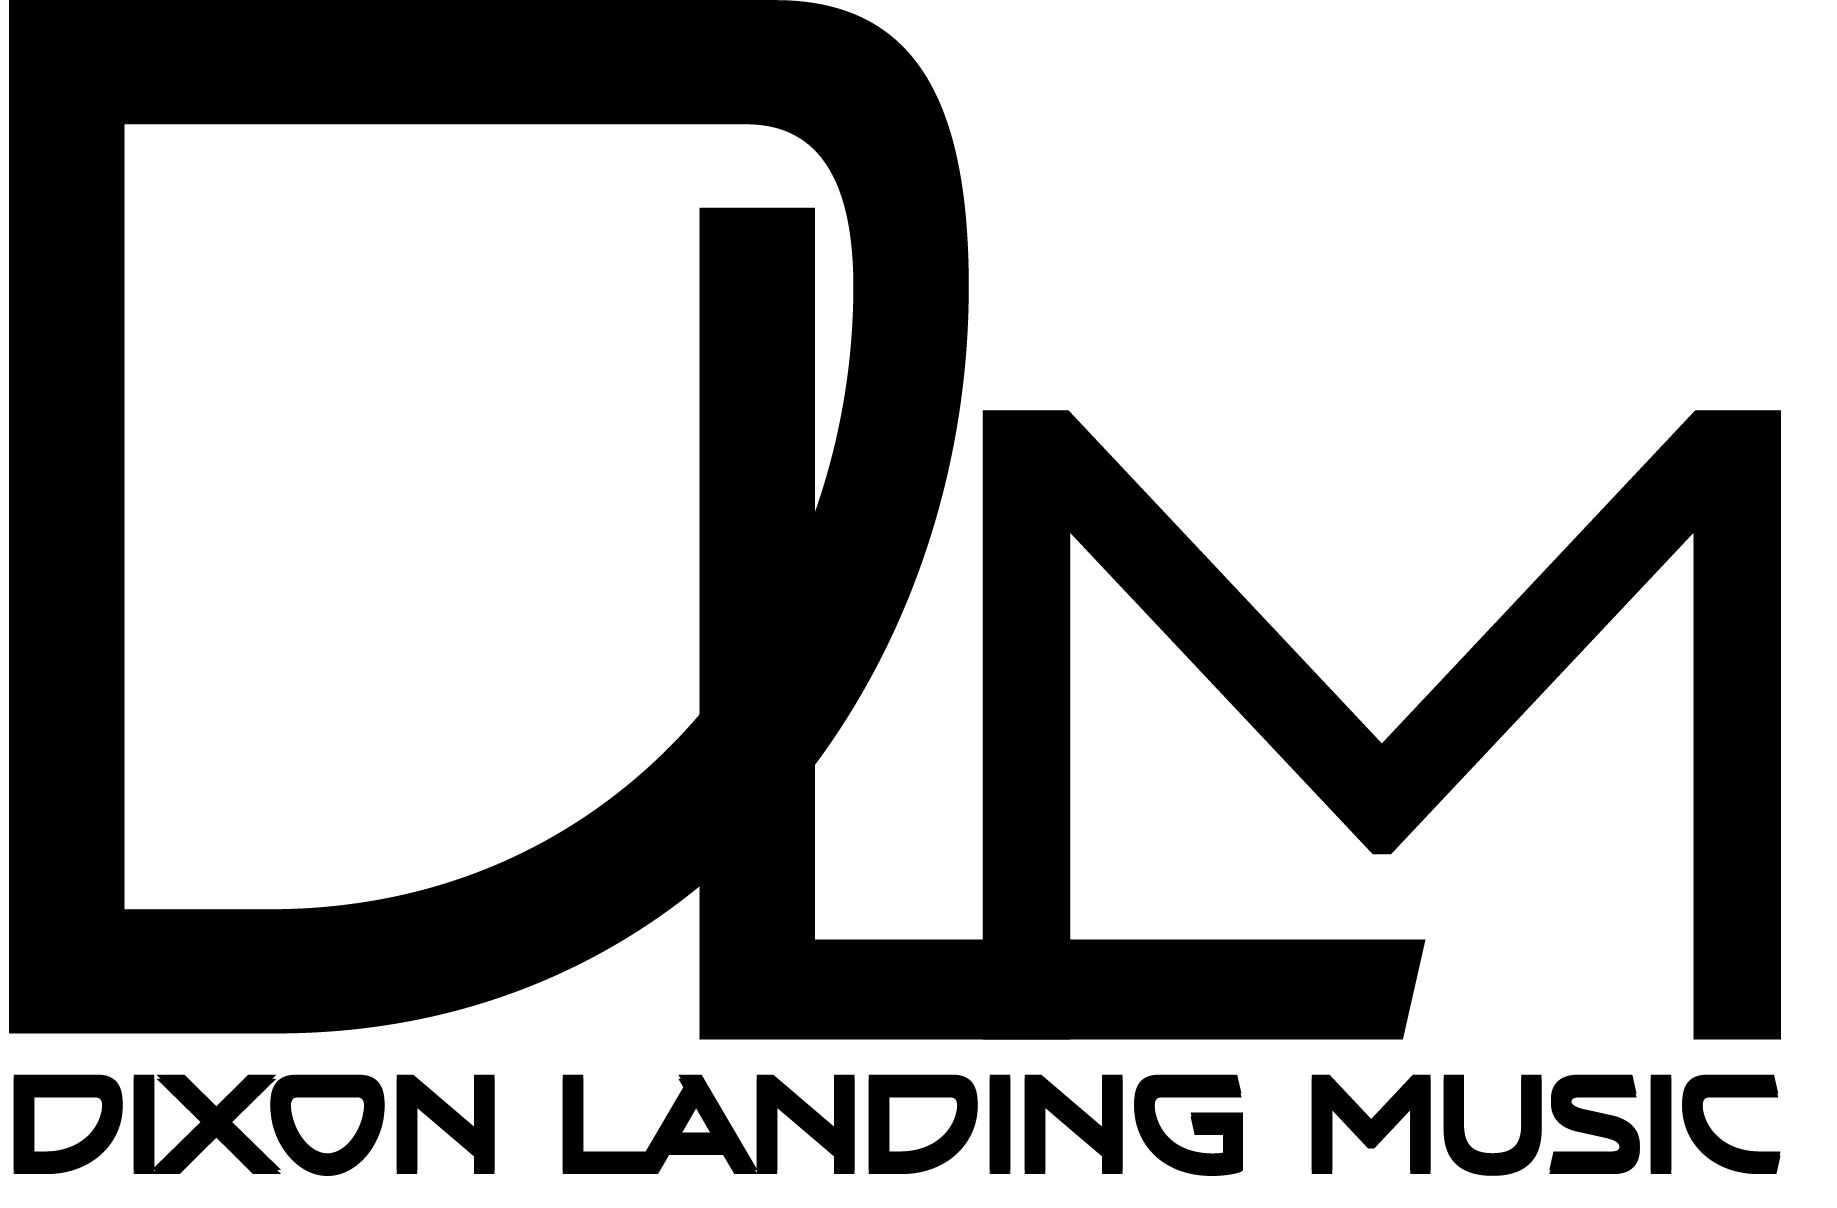 Dixon Landing Music